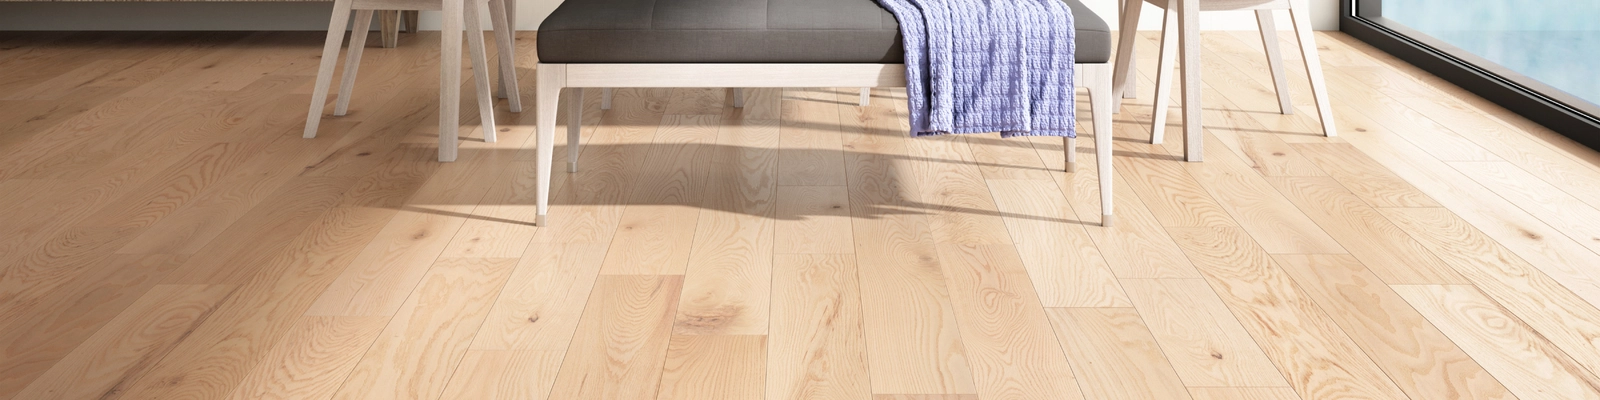 Why choose engineered wood flooring? 